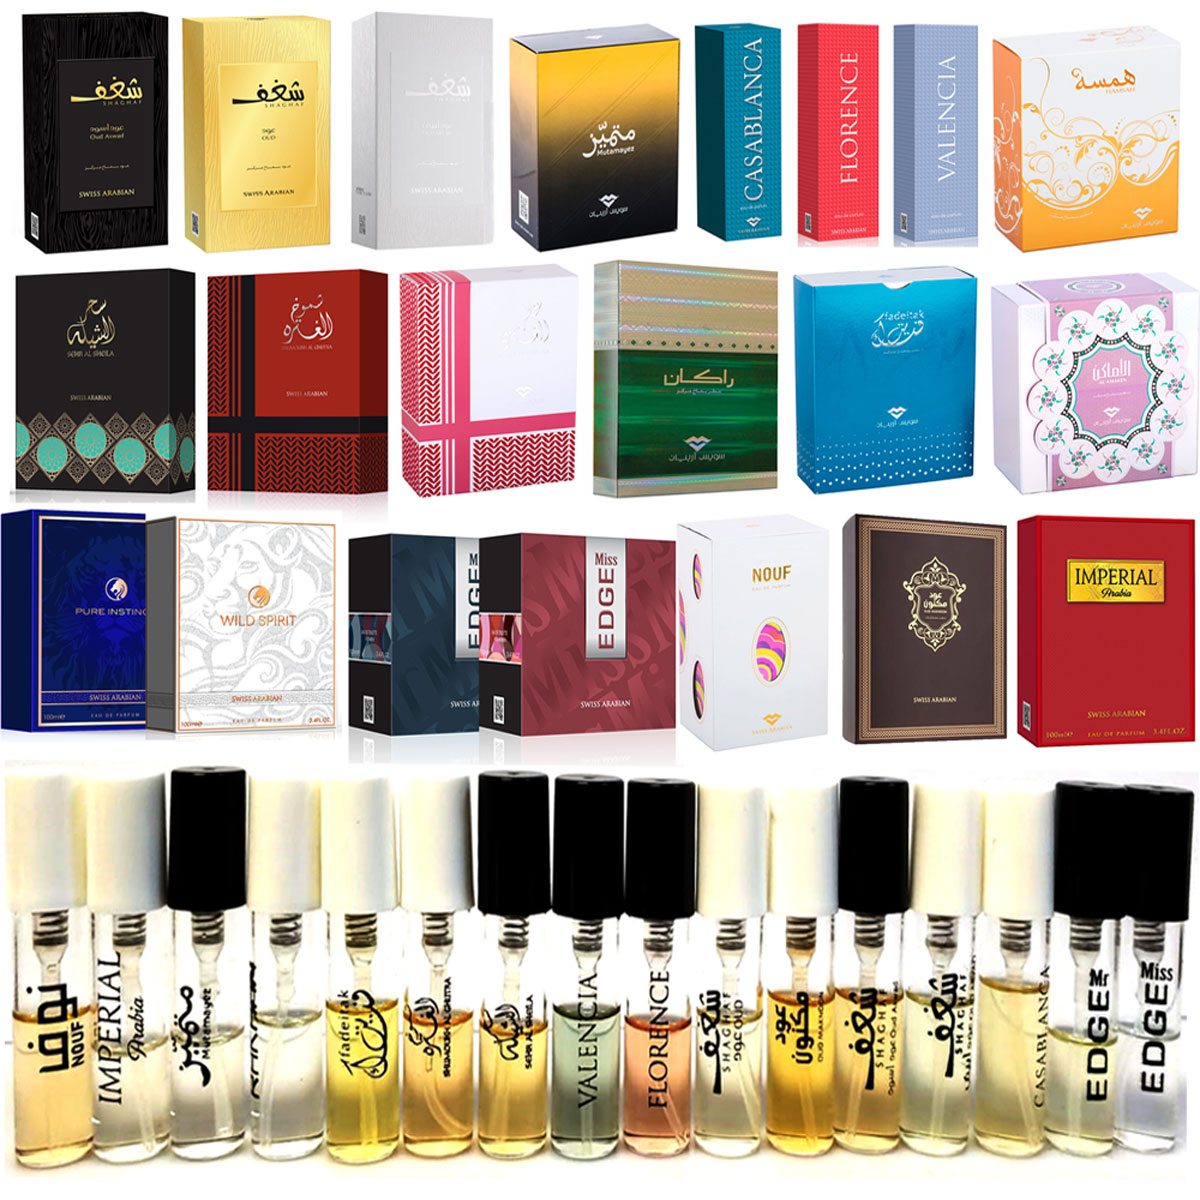 Perfume samples for sampling